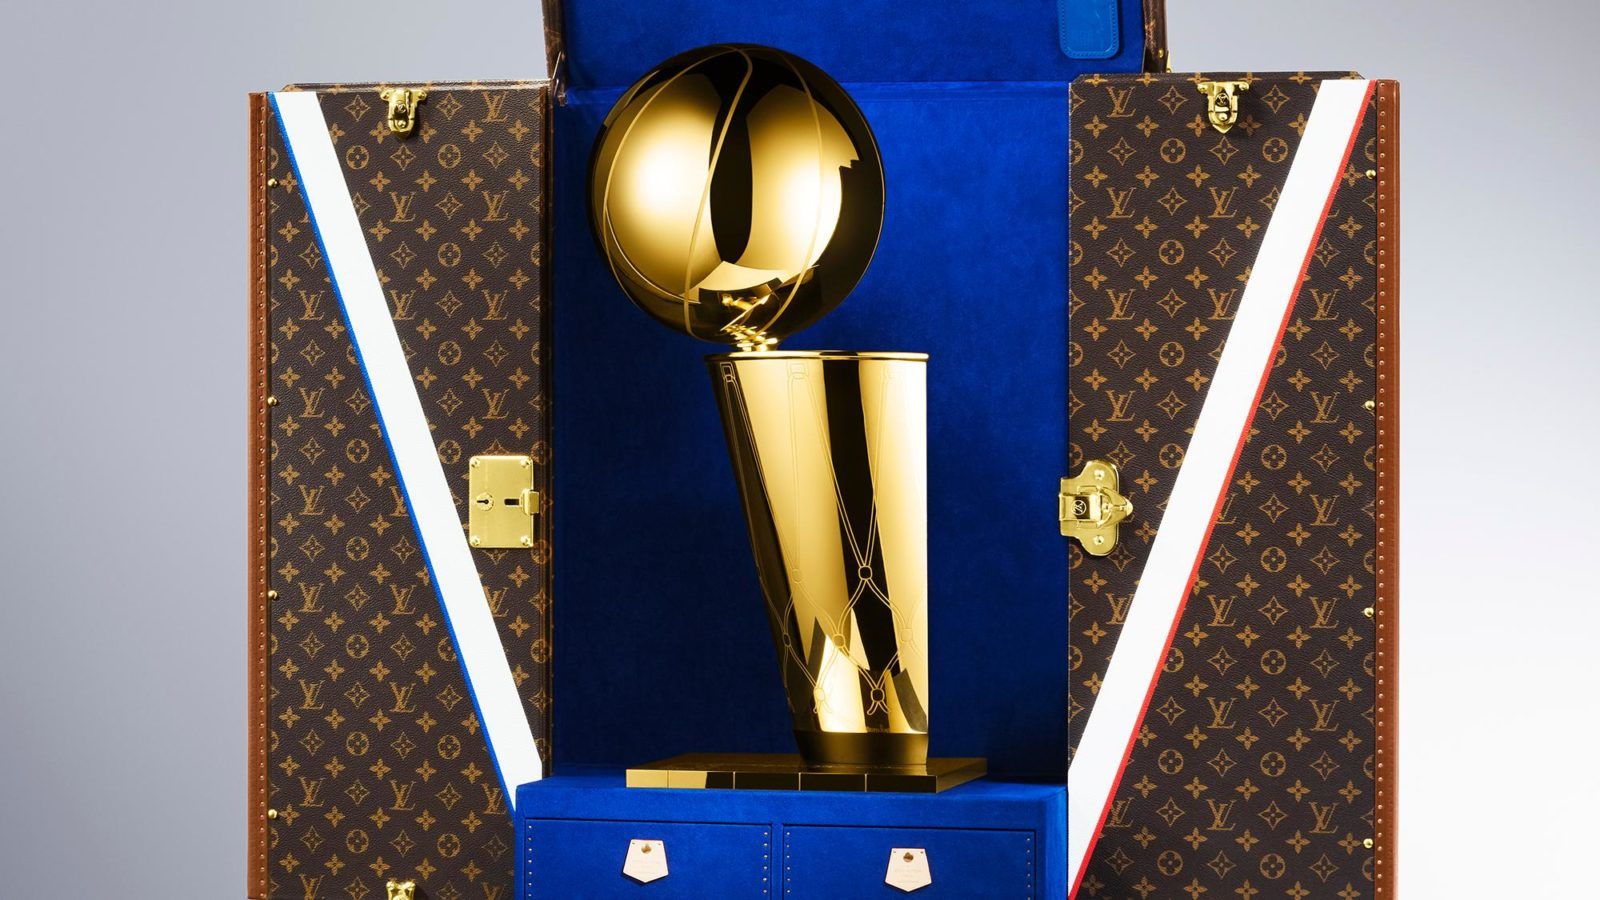 2021 NBA Finals Trophy Awarded in Louis Vuitton Trophy Trunk